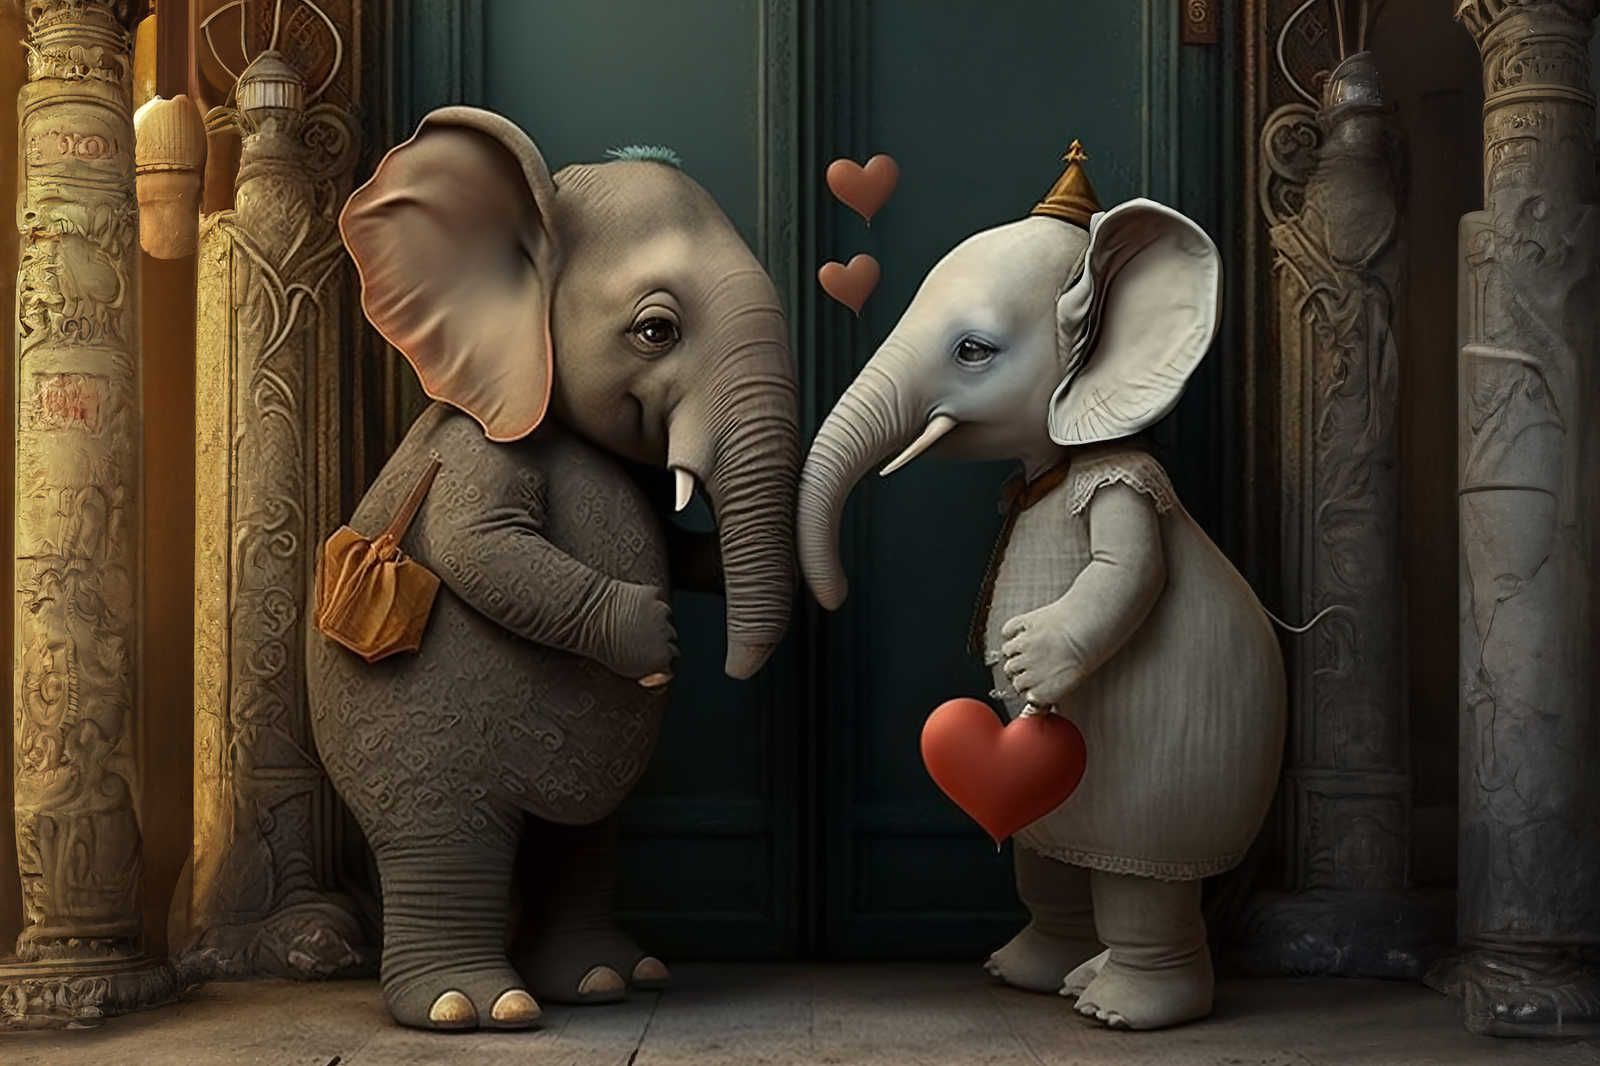             Toile KI »elephant love« - 120 cm x 80 cm
        